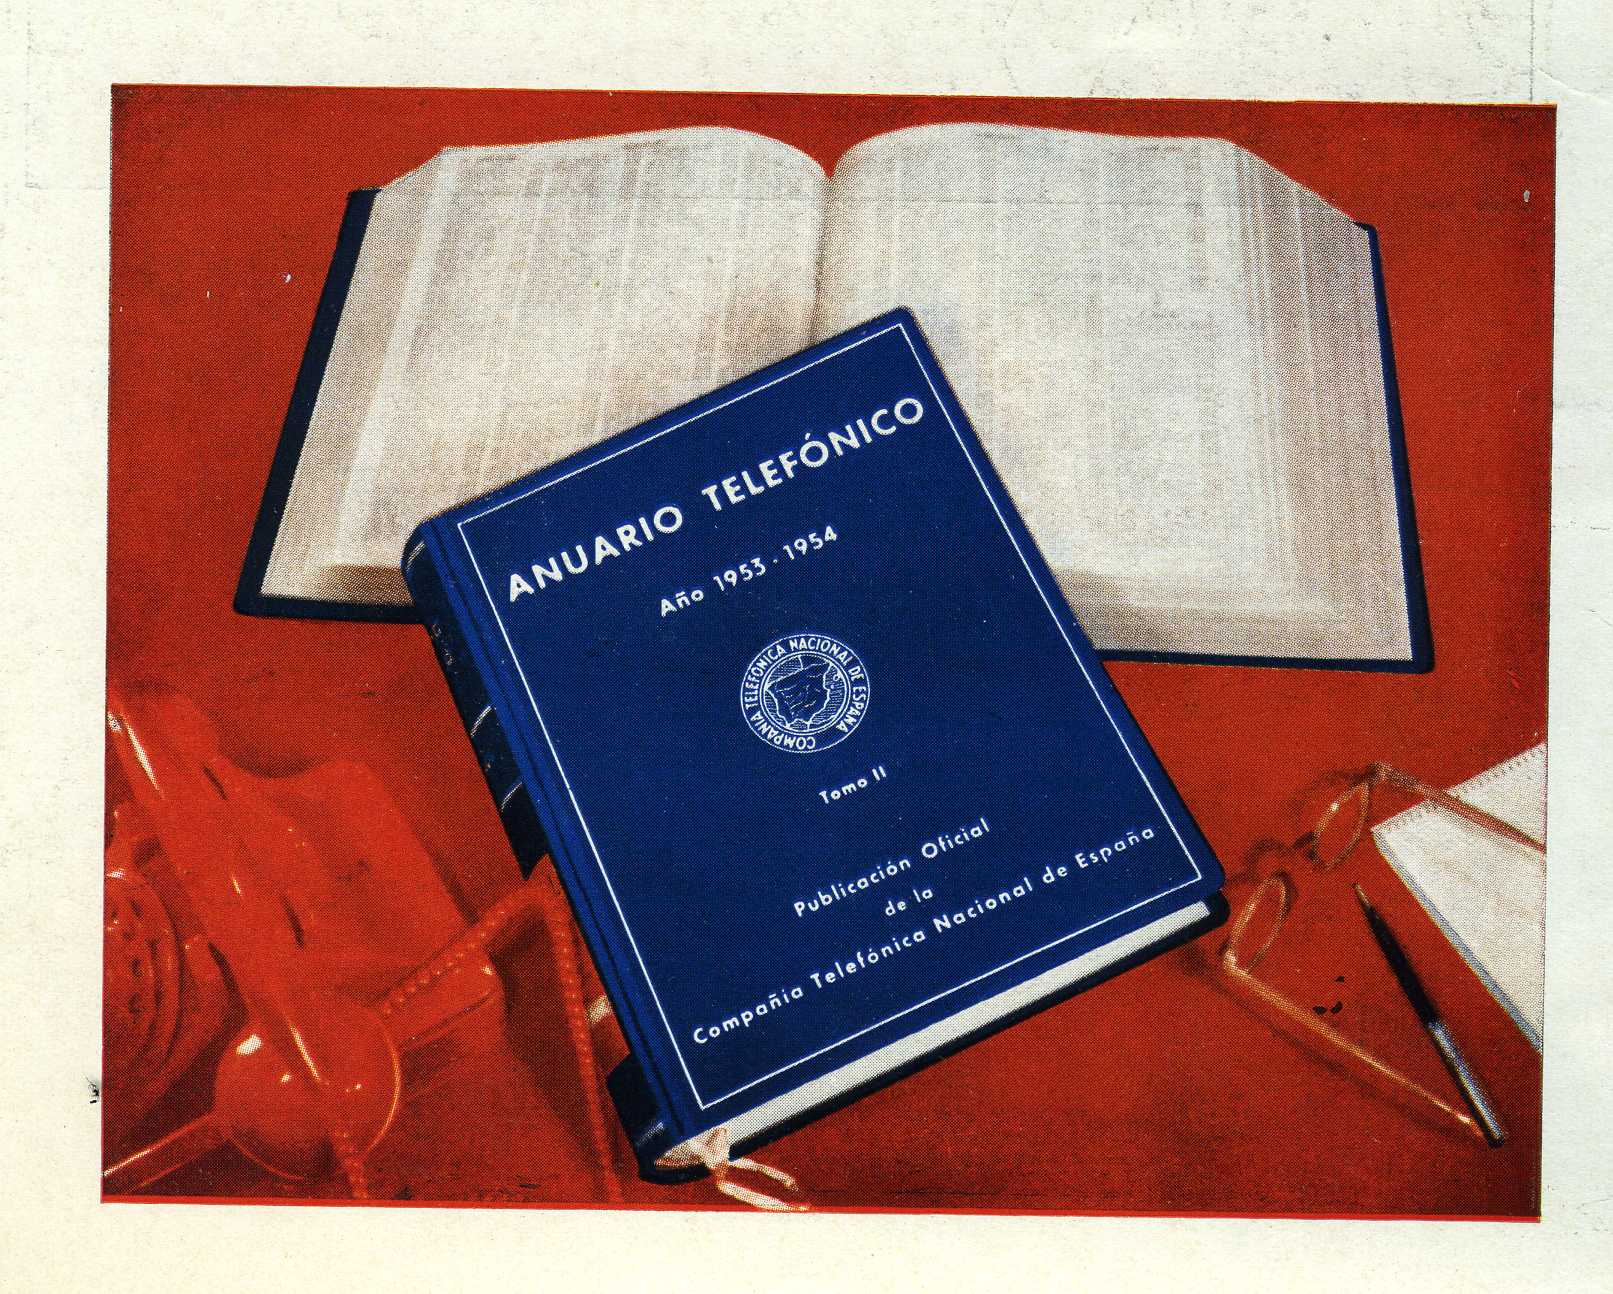 Anuario Telefónico 1953-1954